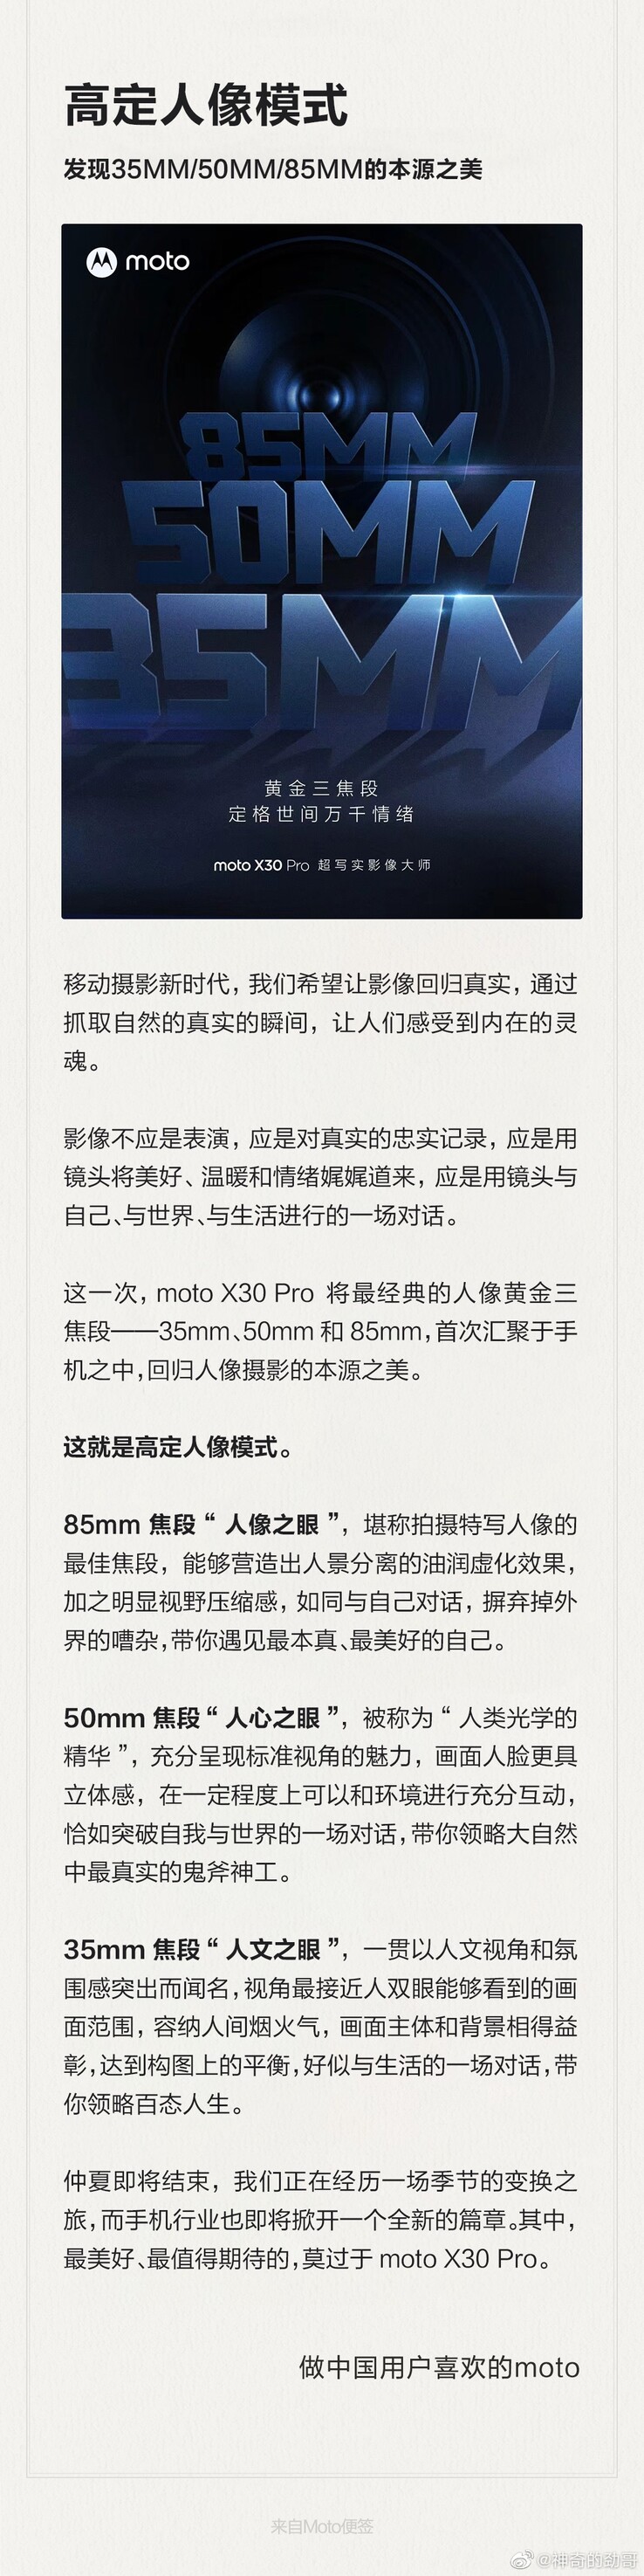 O teaser completo de distância focal Moto X30 Pro da Motorola. (Fonte: Motorola via Weibo)